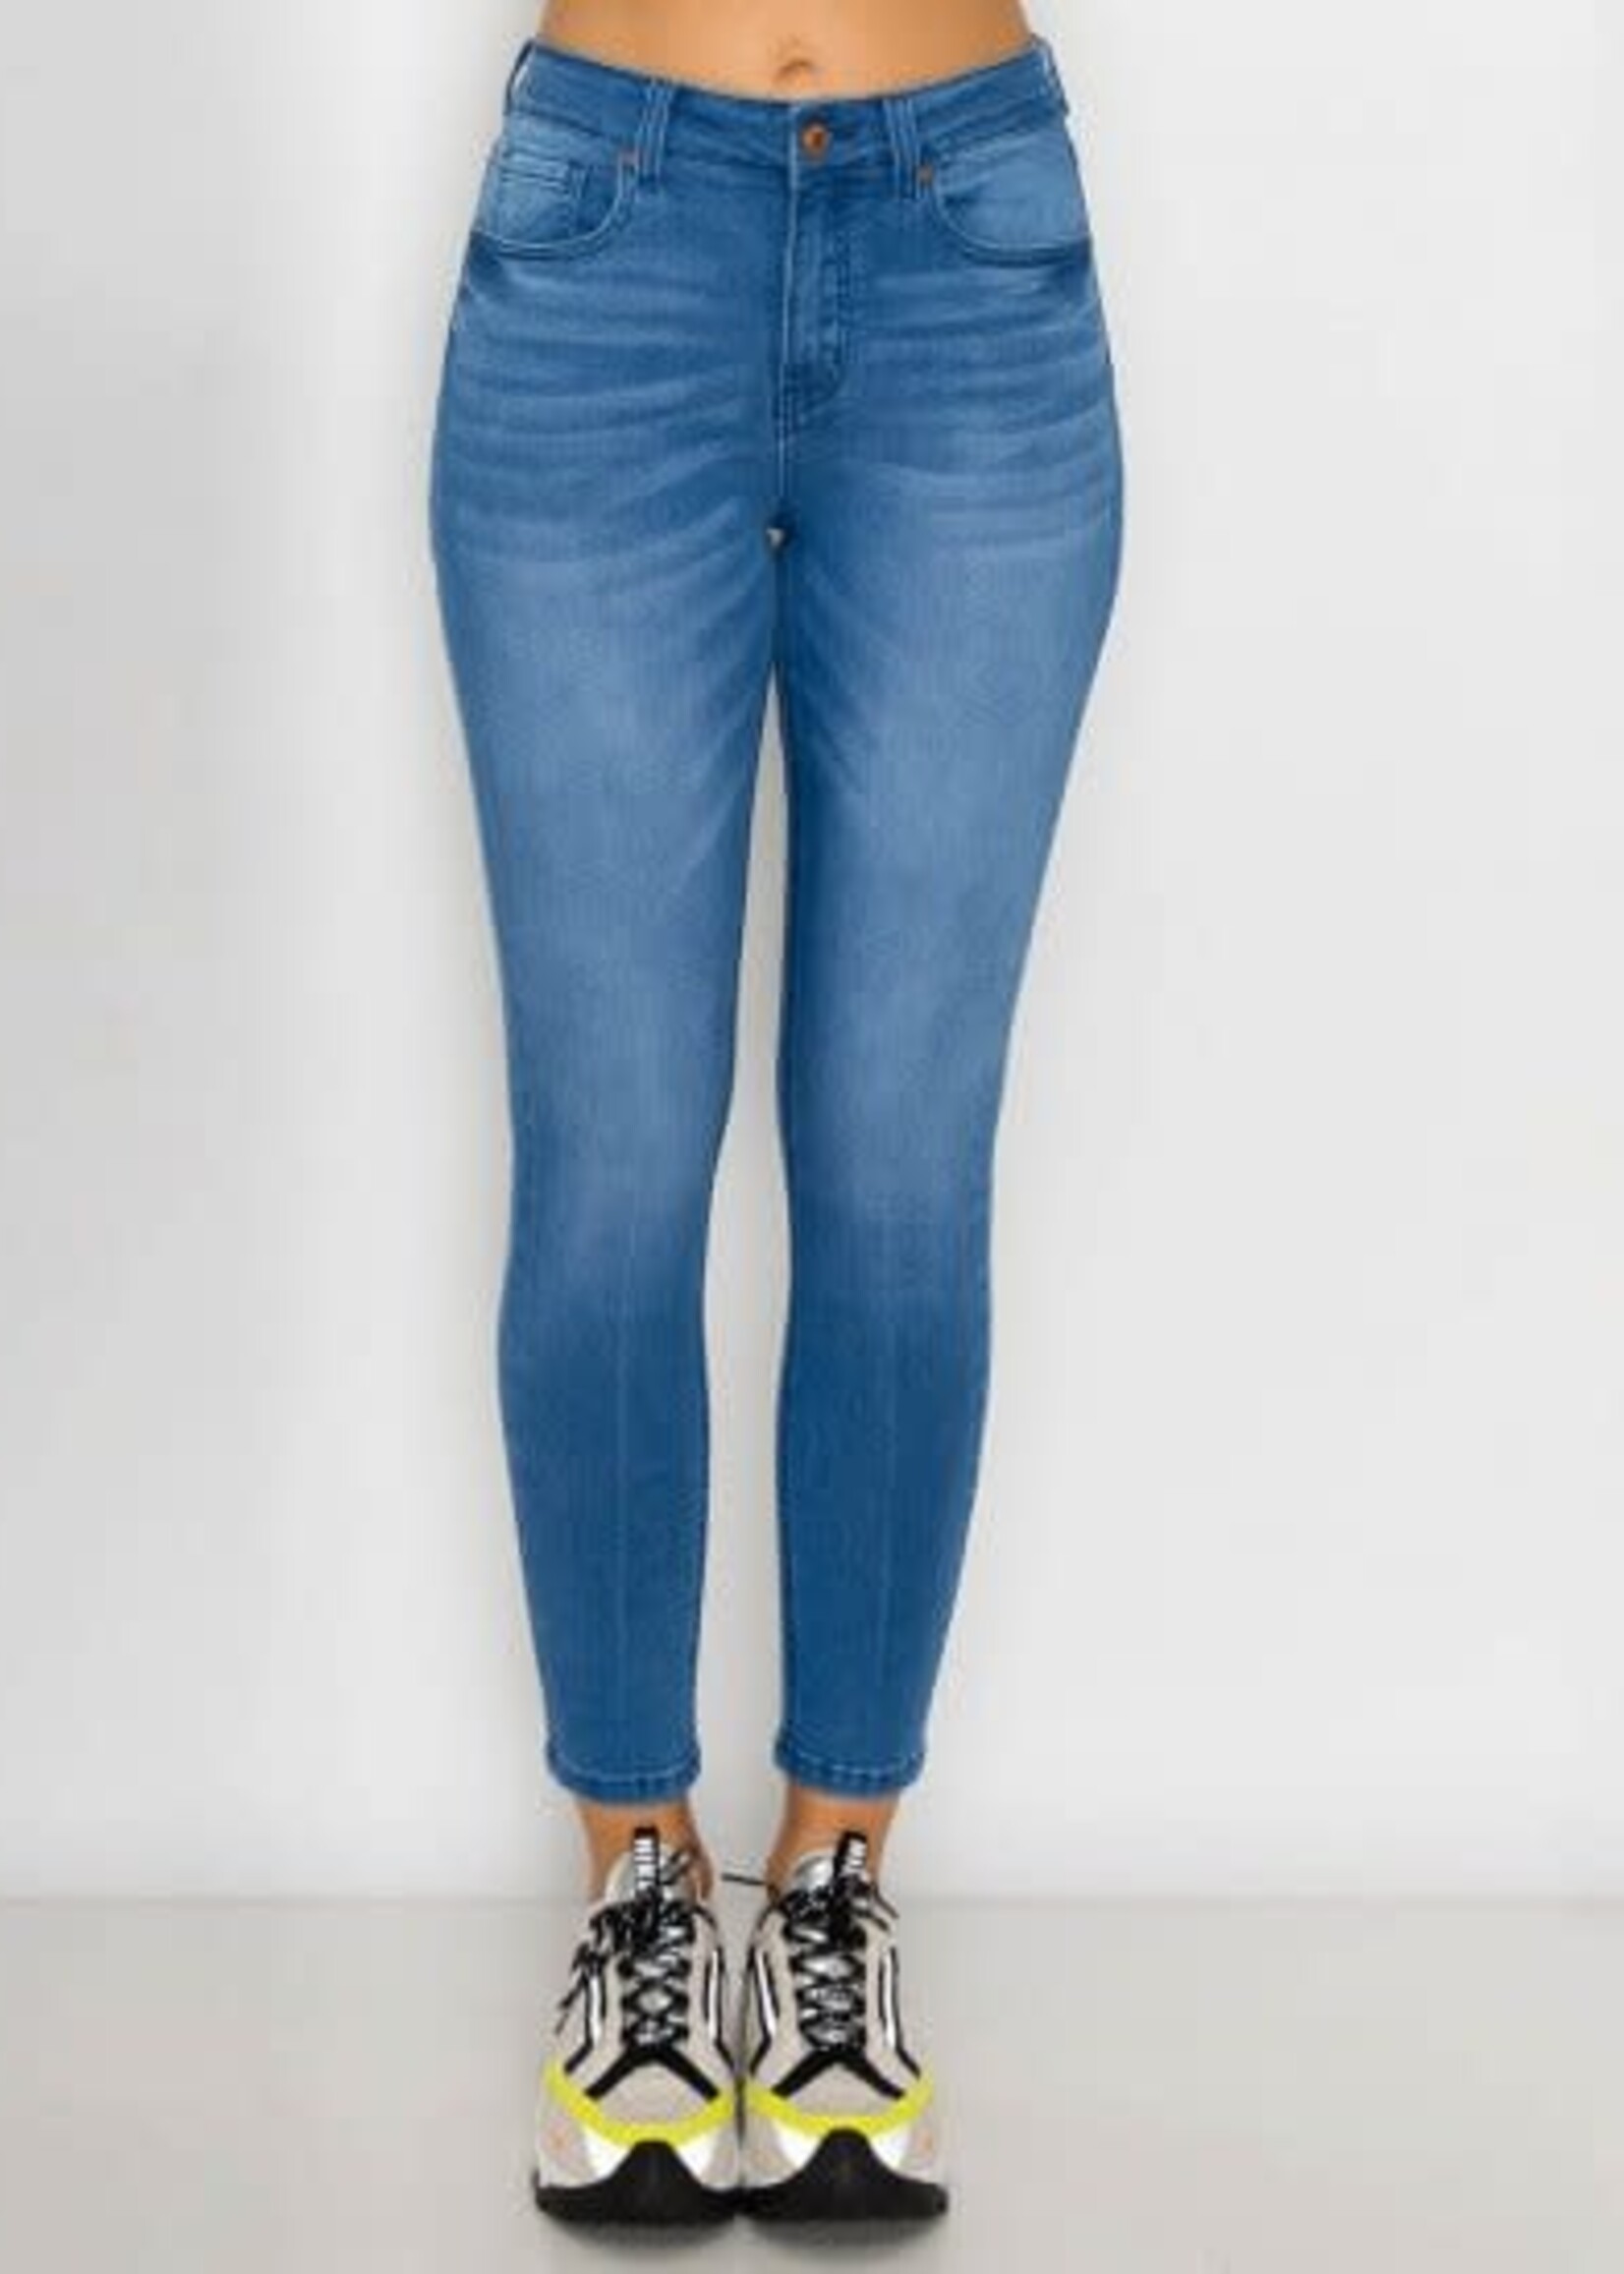 Wax Jean - Modal Fabric Basic Skinny Jean - 90238